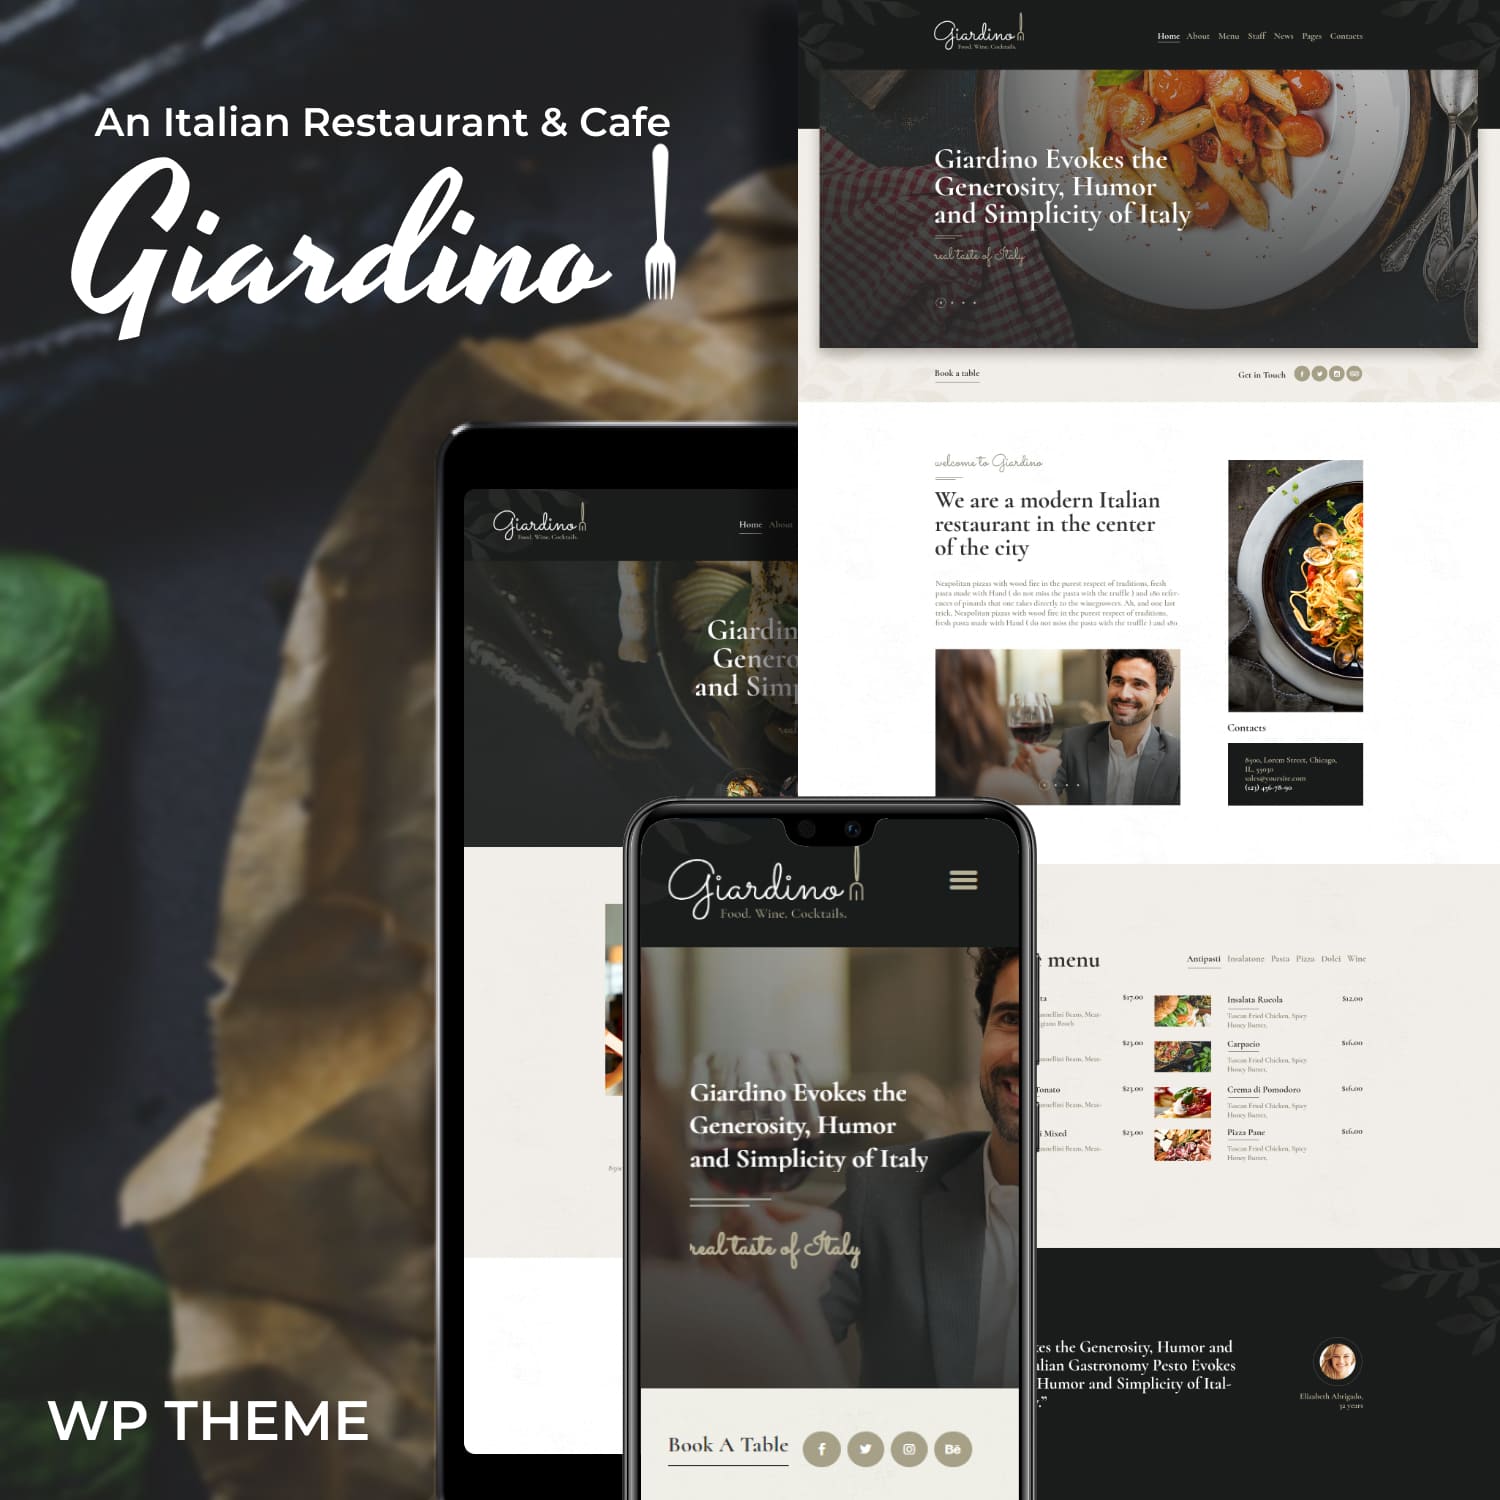 Giardino | An Italian Restaurant & Cafe WordPress Theme.